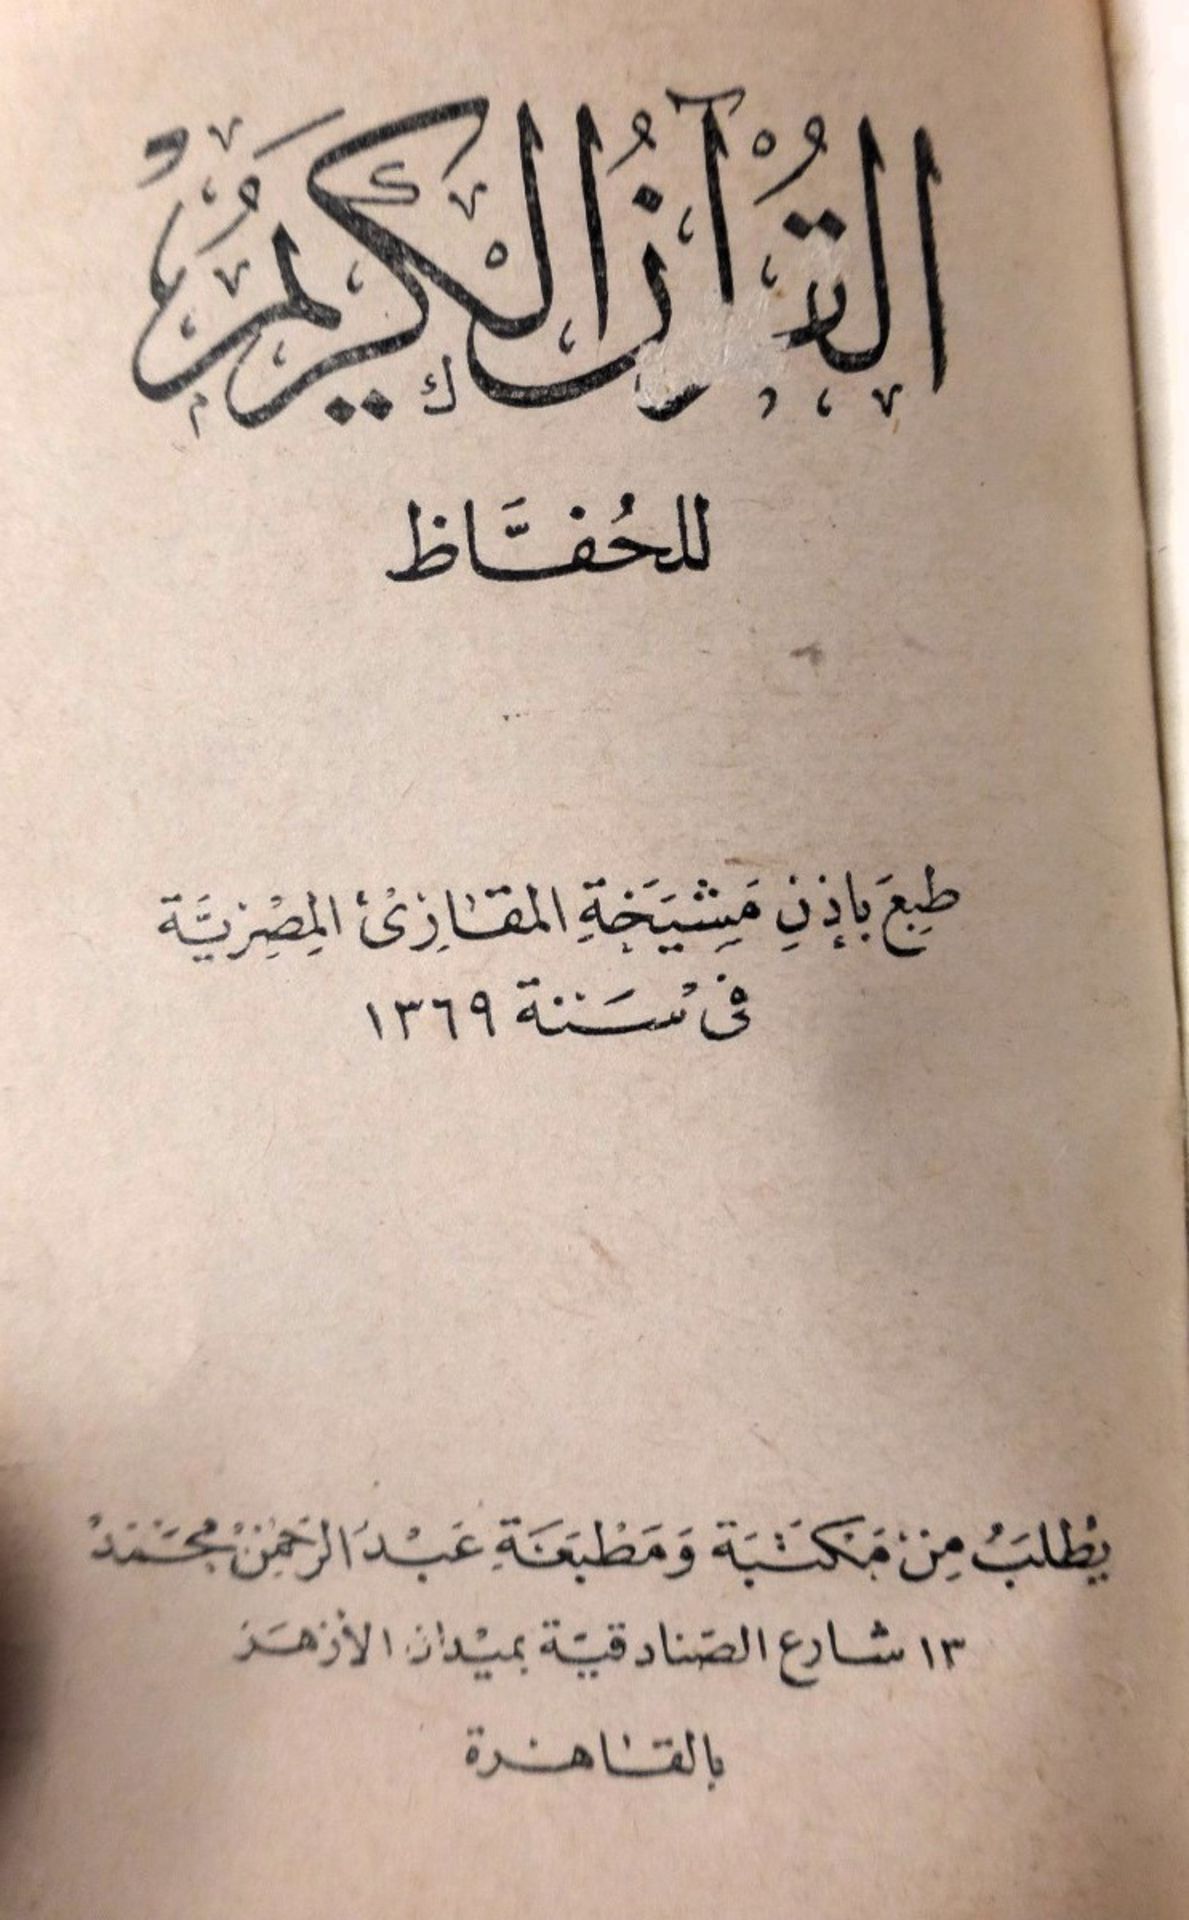 Miniatur Koran - Image 2 of 2